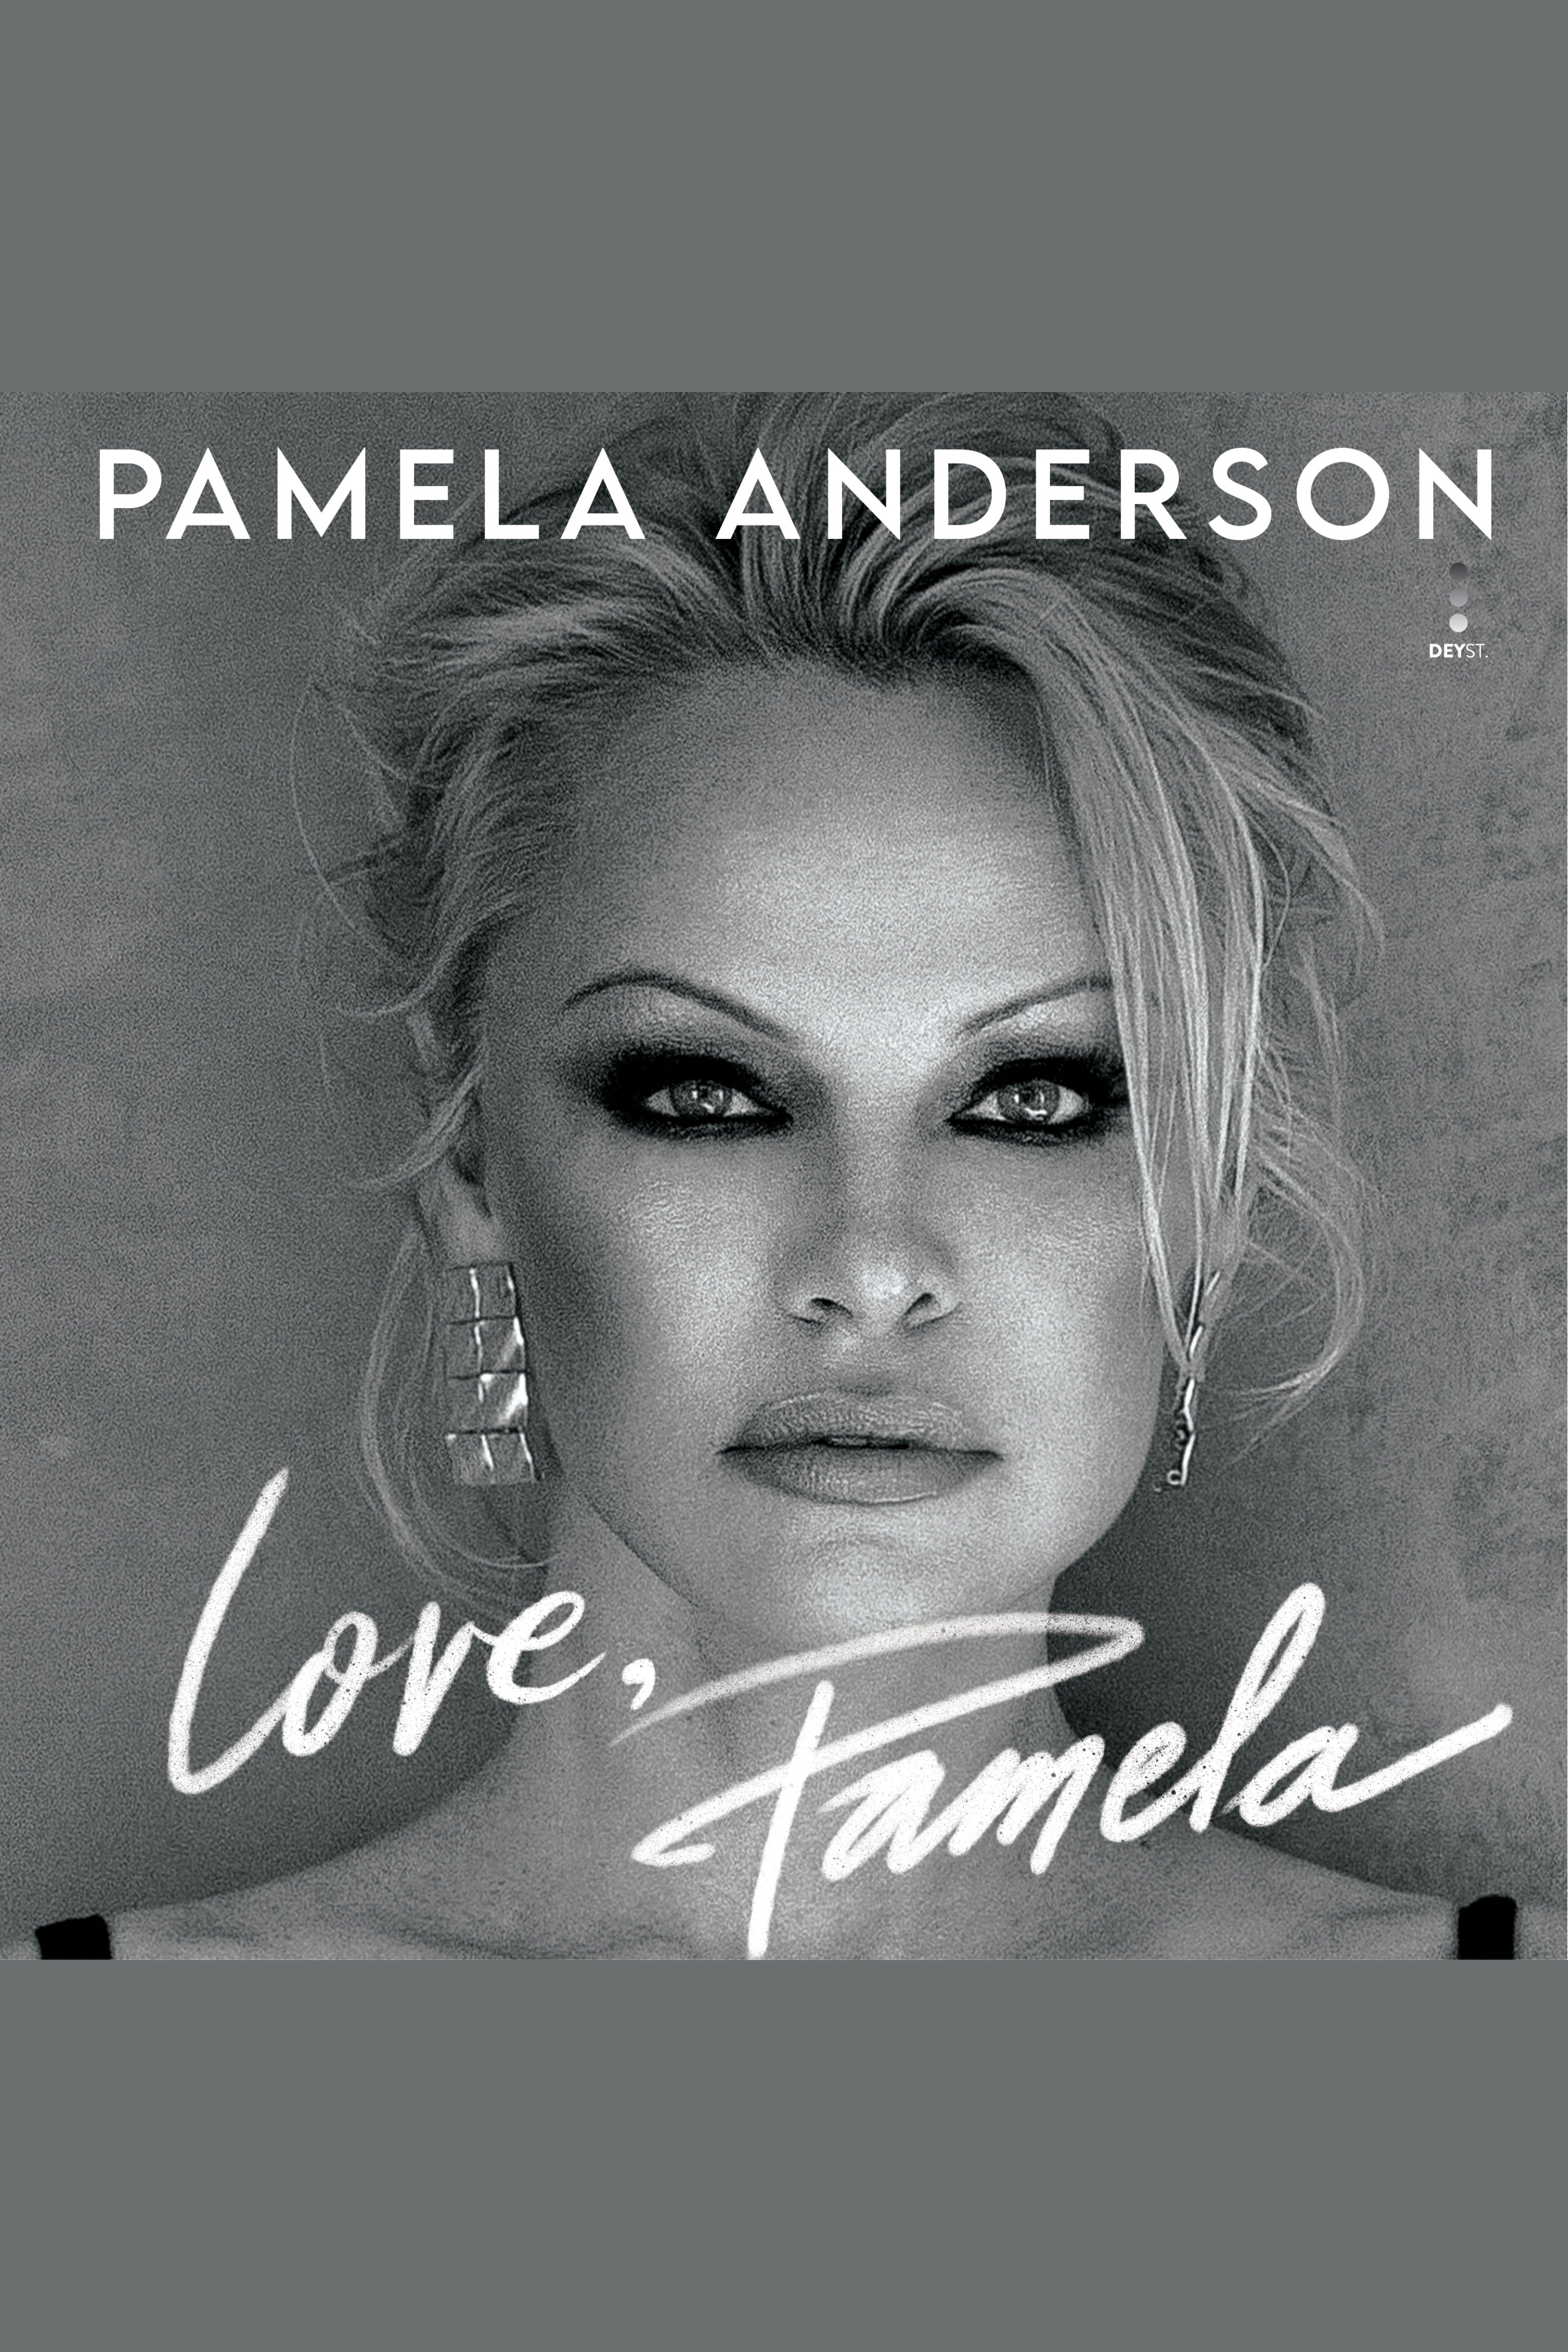 Love, Pamela cover image